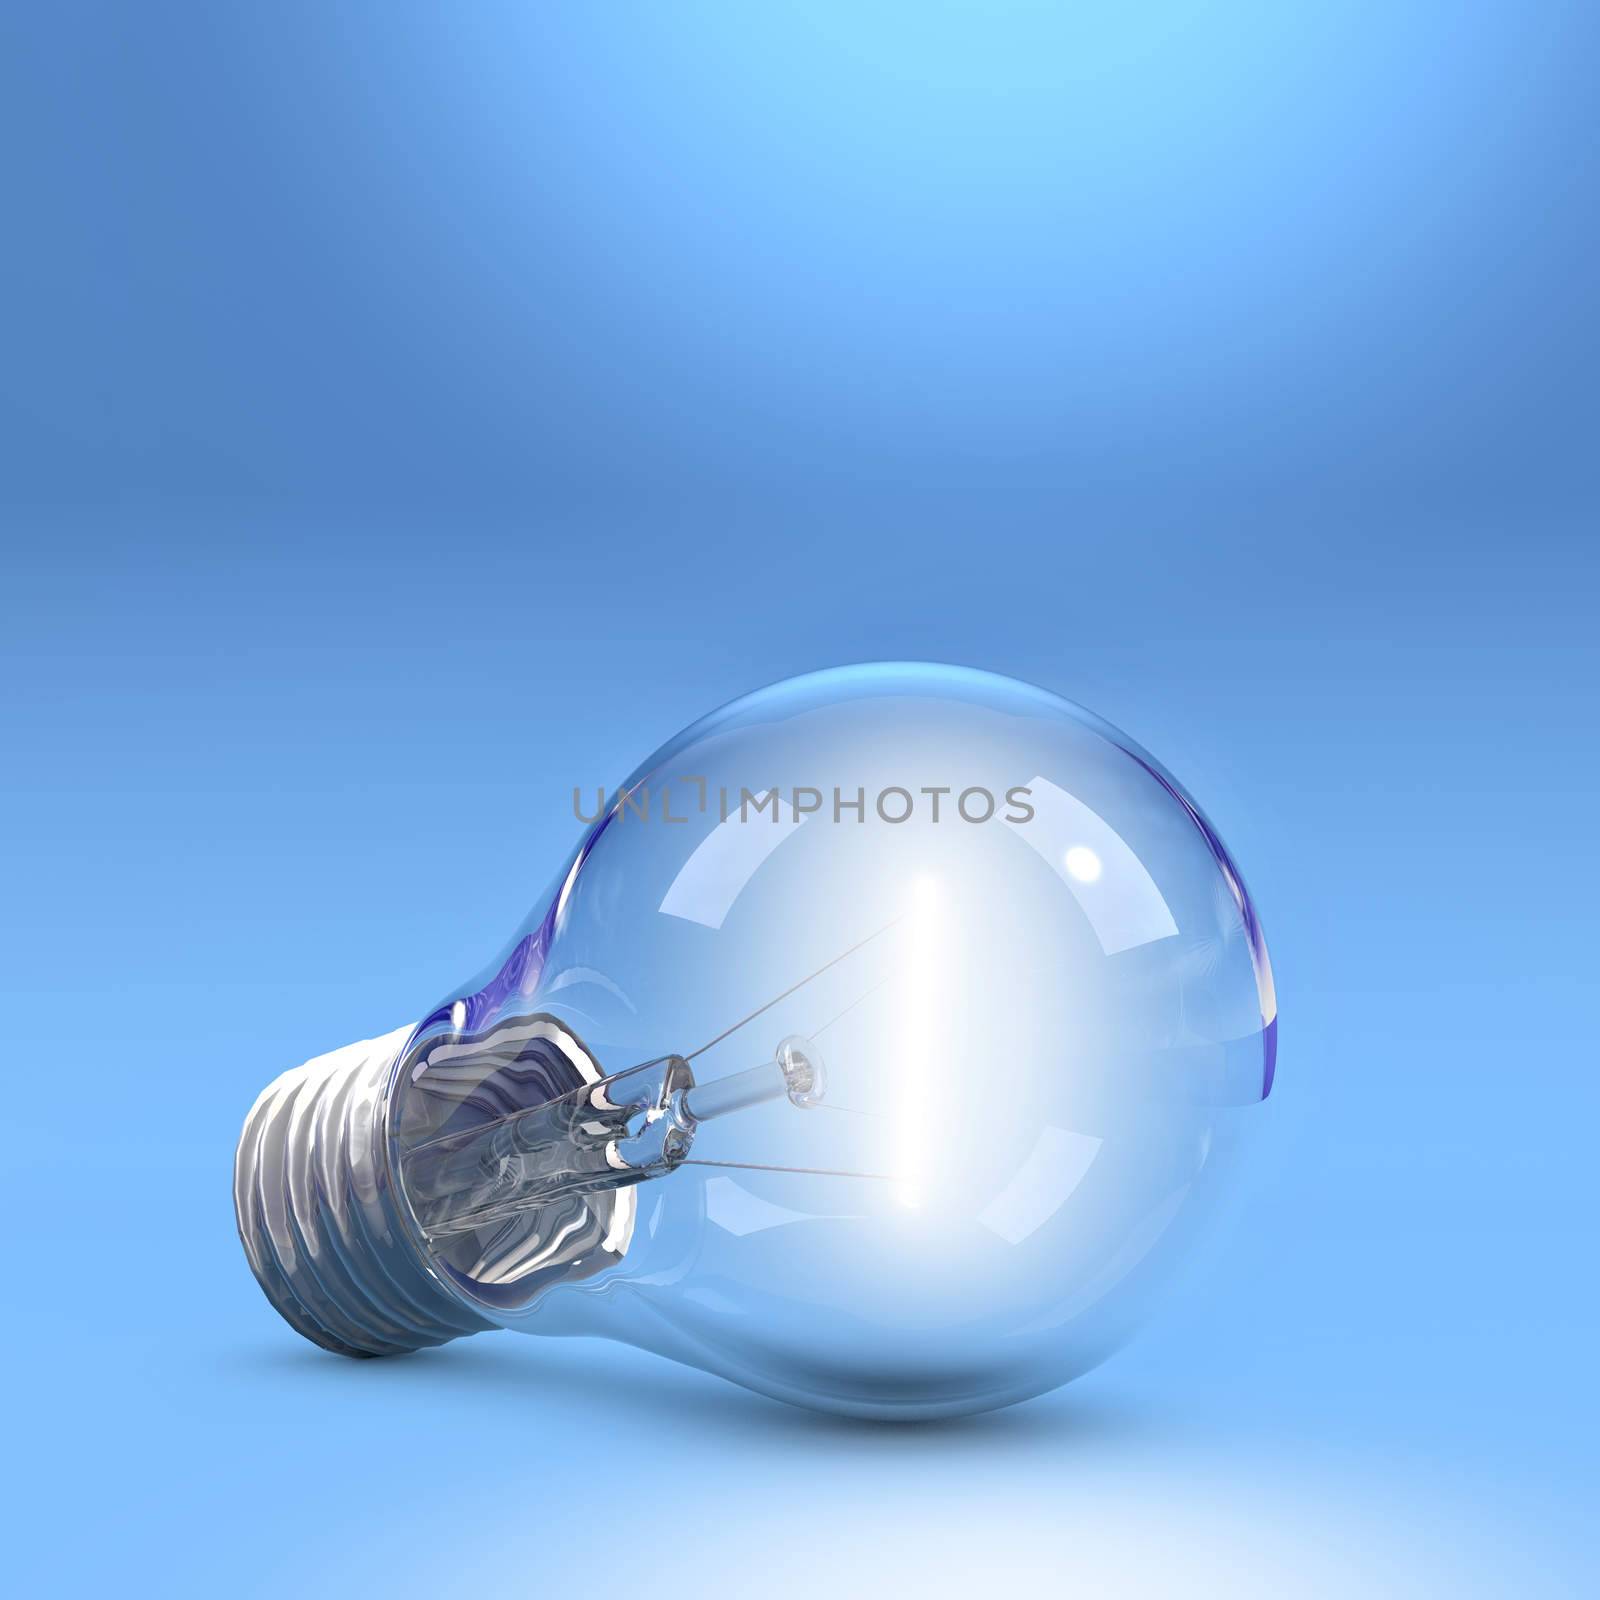 Incandescent light bulb on floor